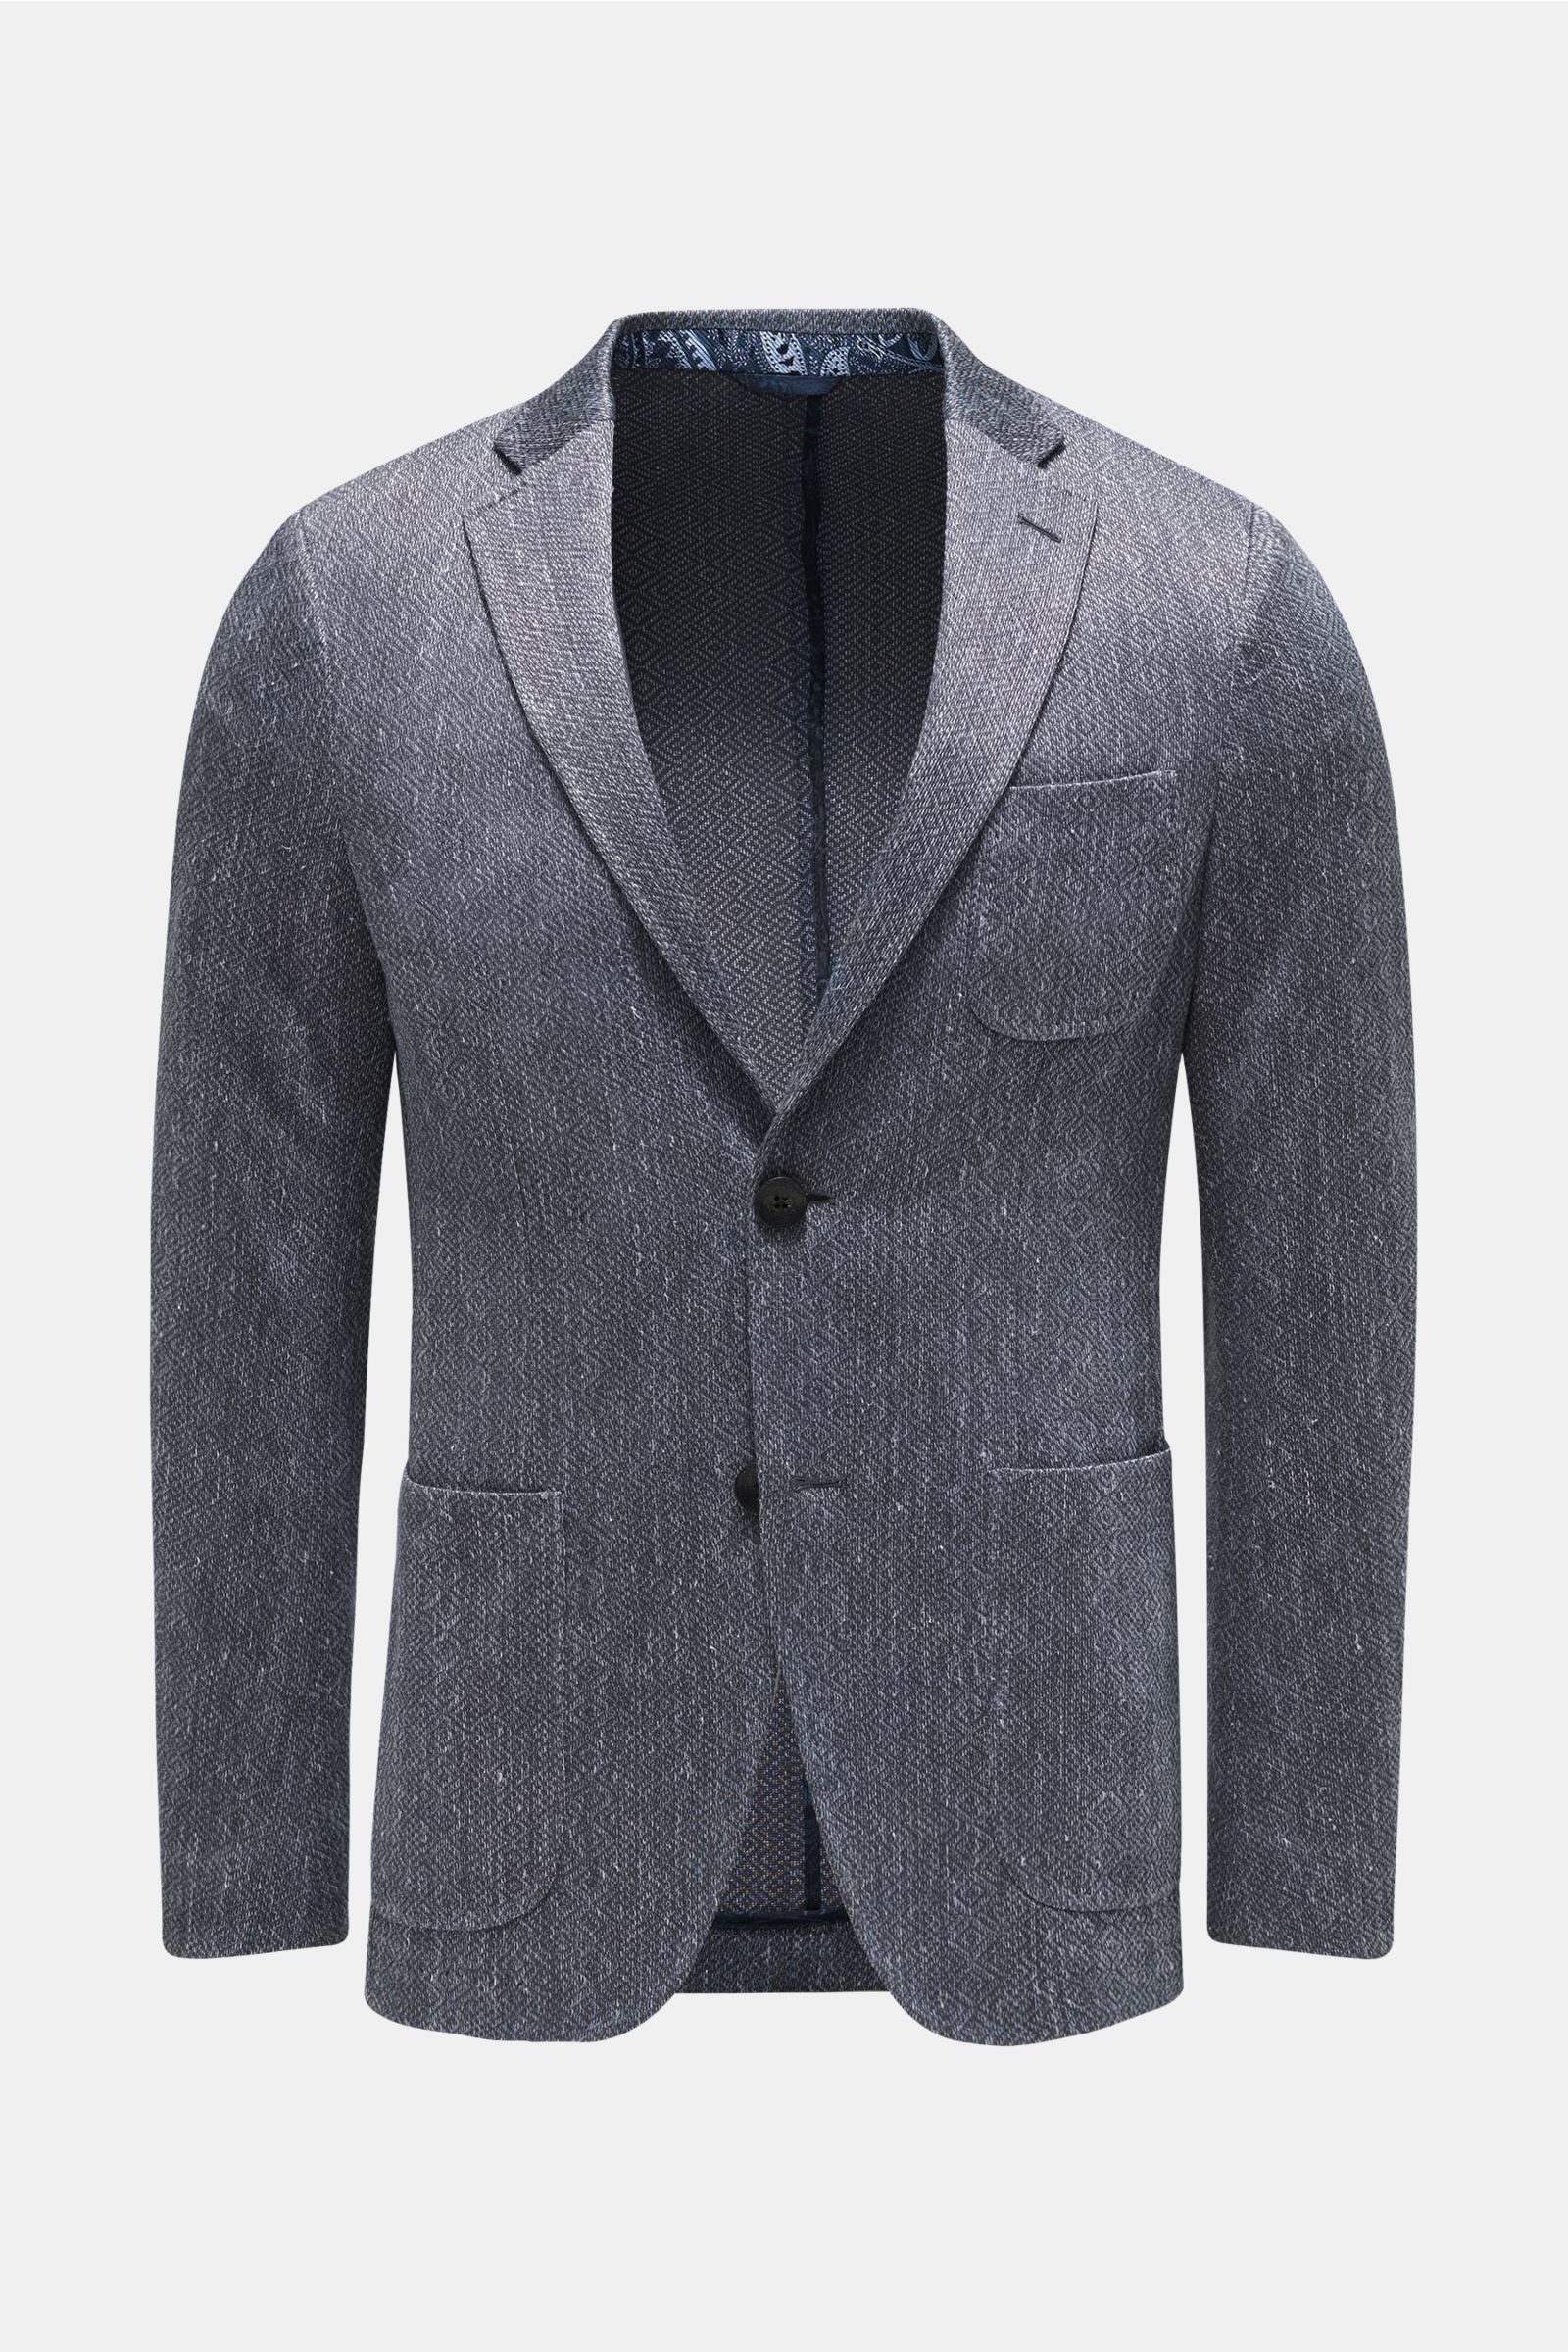 Smart-casual jacket grey-blue patterned